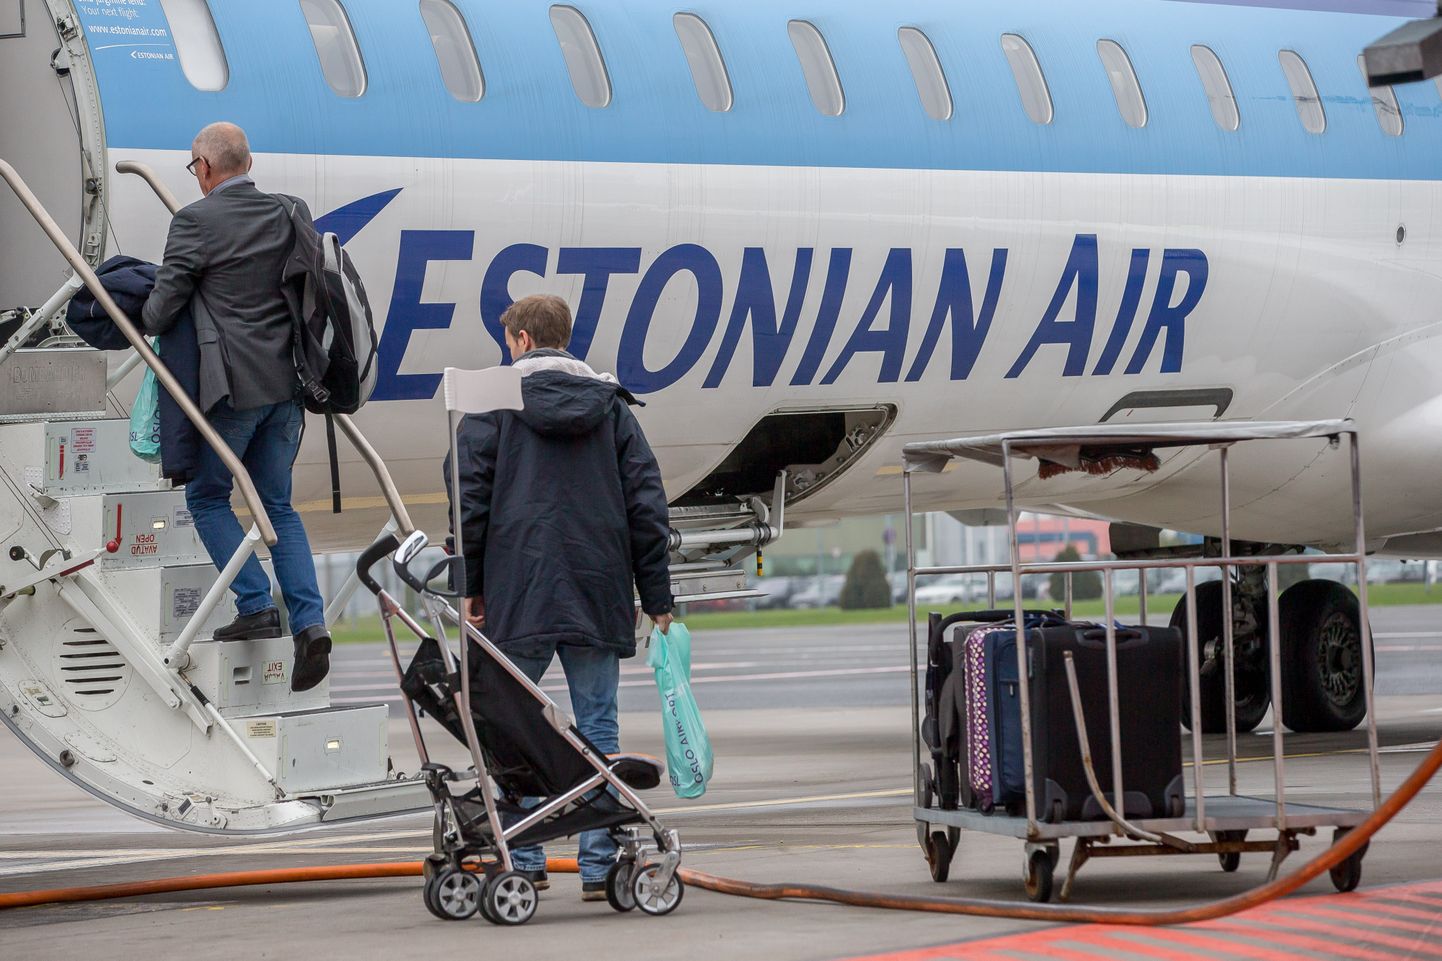 Estonian Air lennuk. Pardale minek. Tallinna lennujaam. FOTO:SANDER ILVEST/POSTIMEES